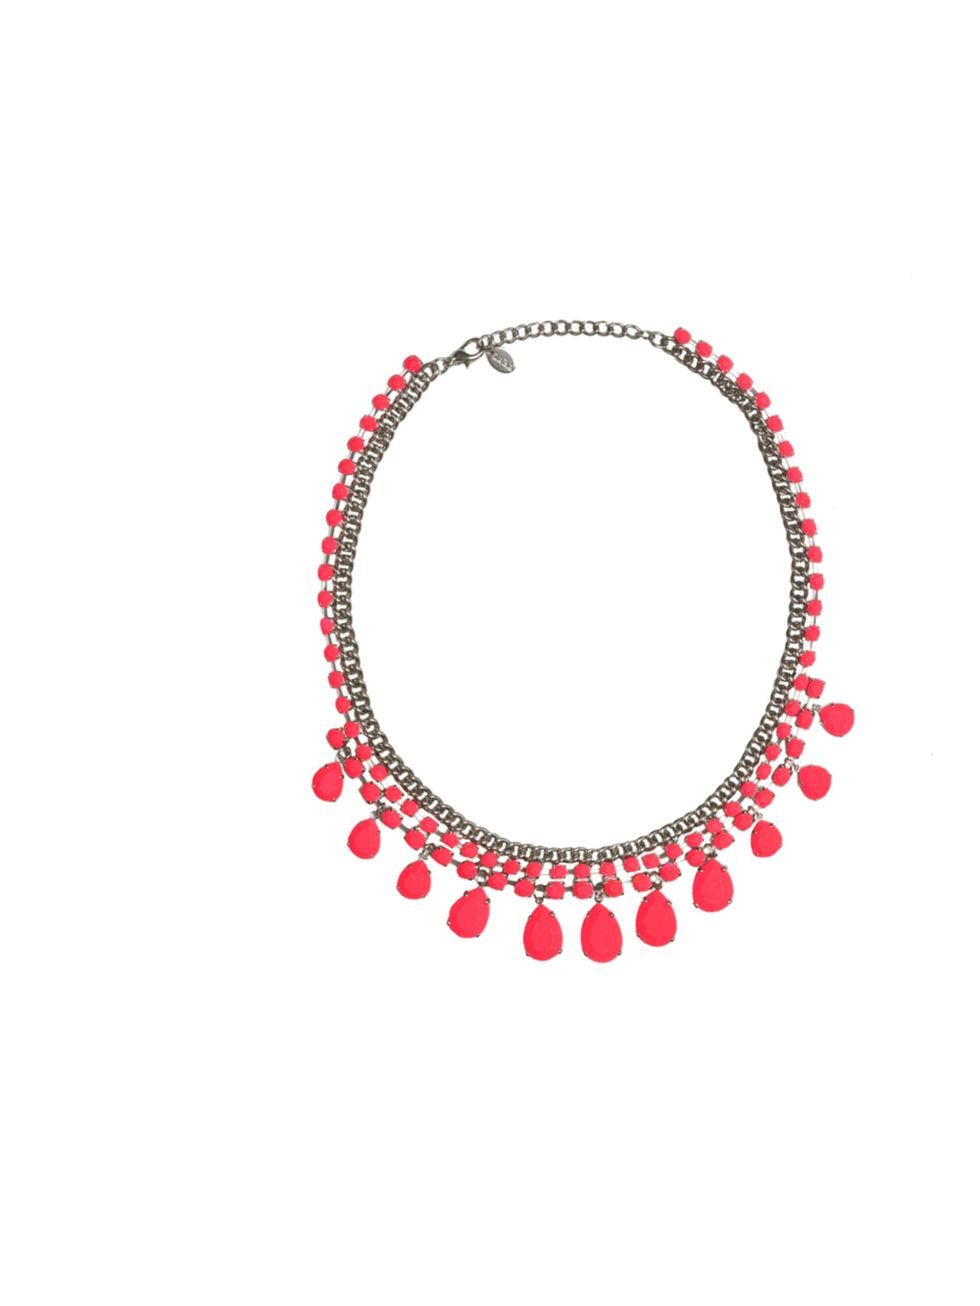 <p><a href="http://www.zara.com/webapp/wcs/stores/servlet/category/uk/en/zara-S2012-s/244417/Accessories">Zara</a> neon stone necklace, £15.99</p>